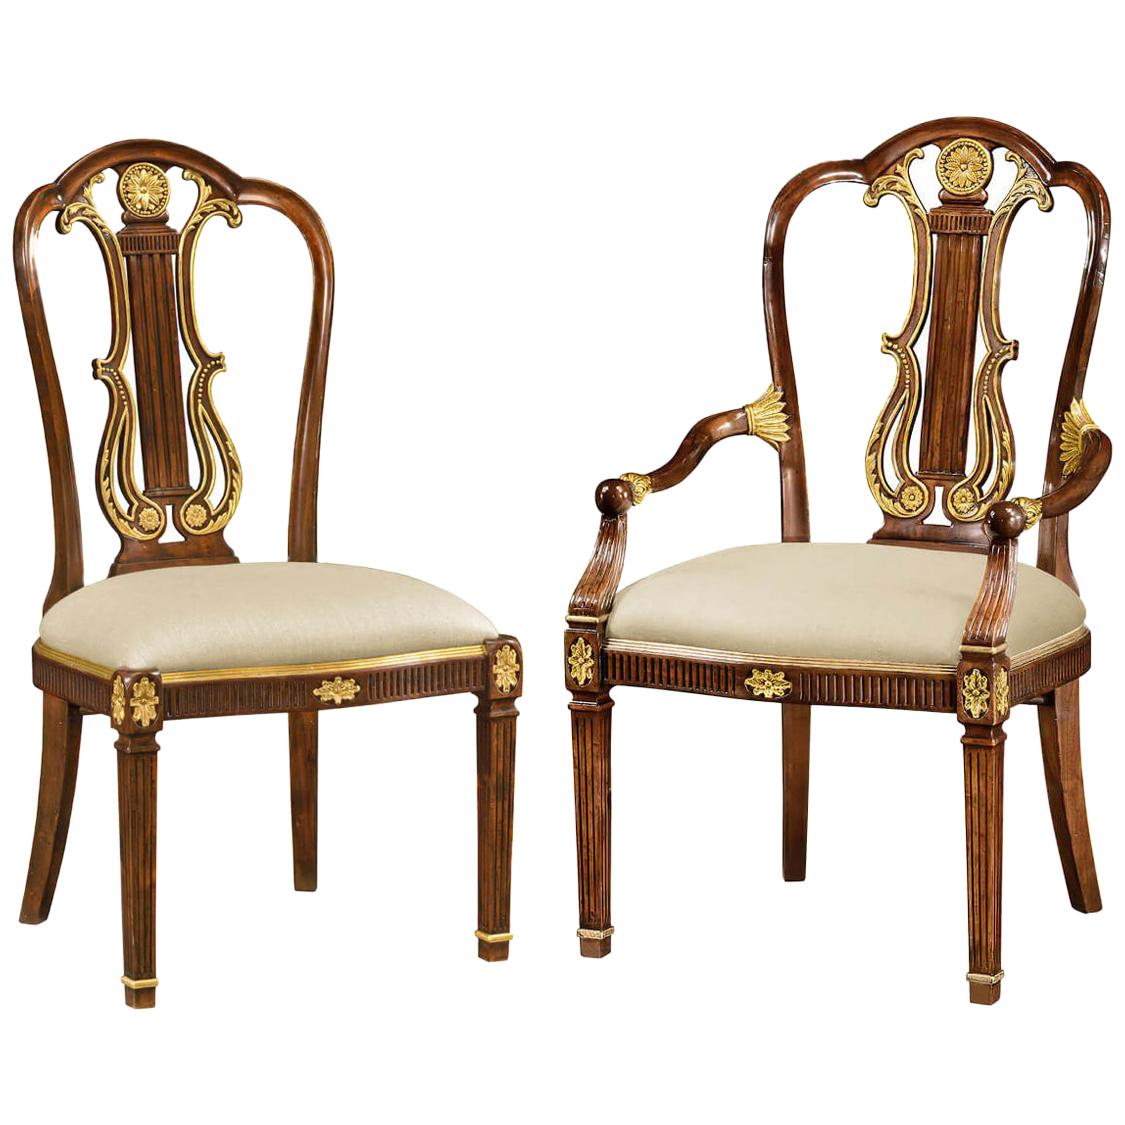 George III Adam Style Dining Chairs